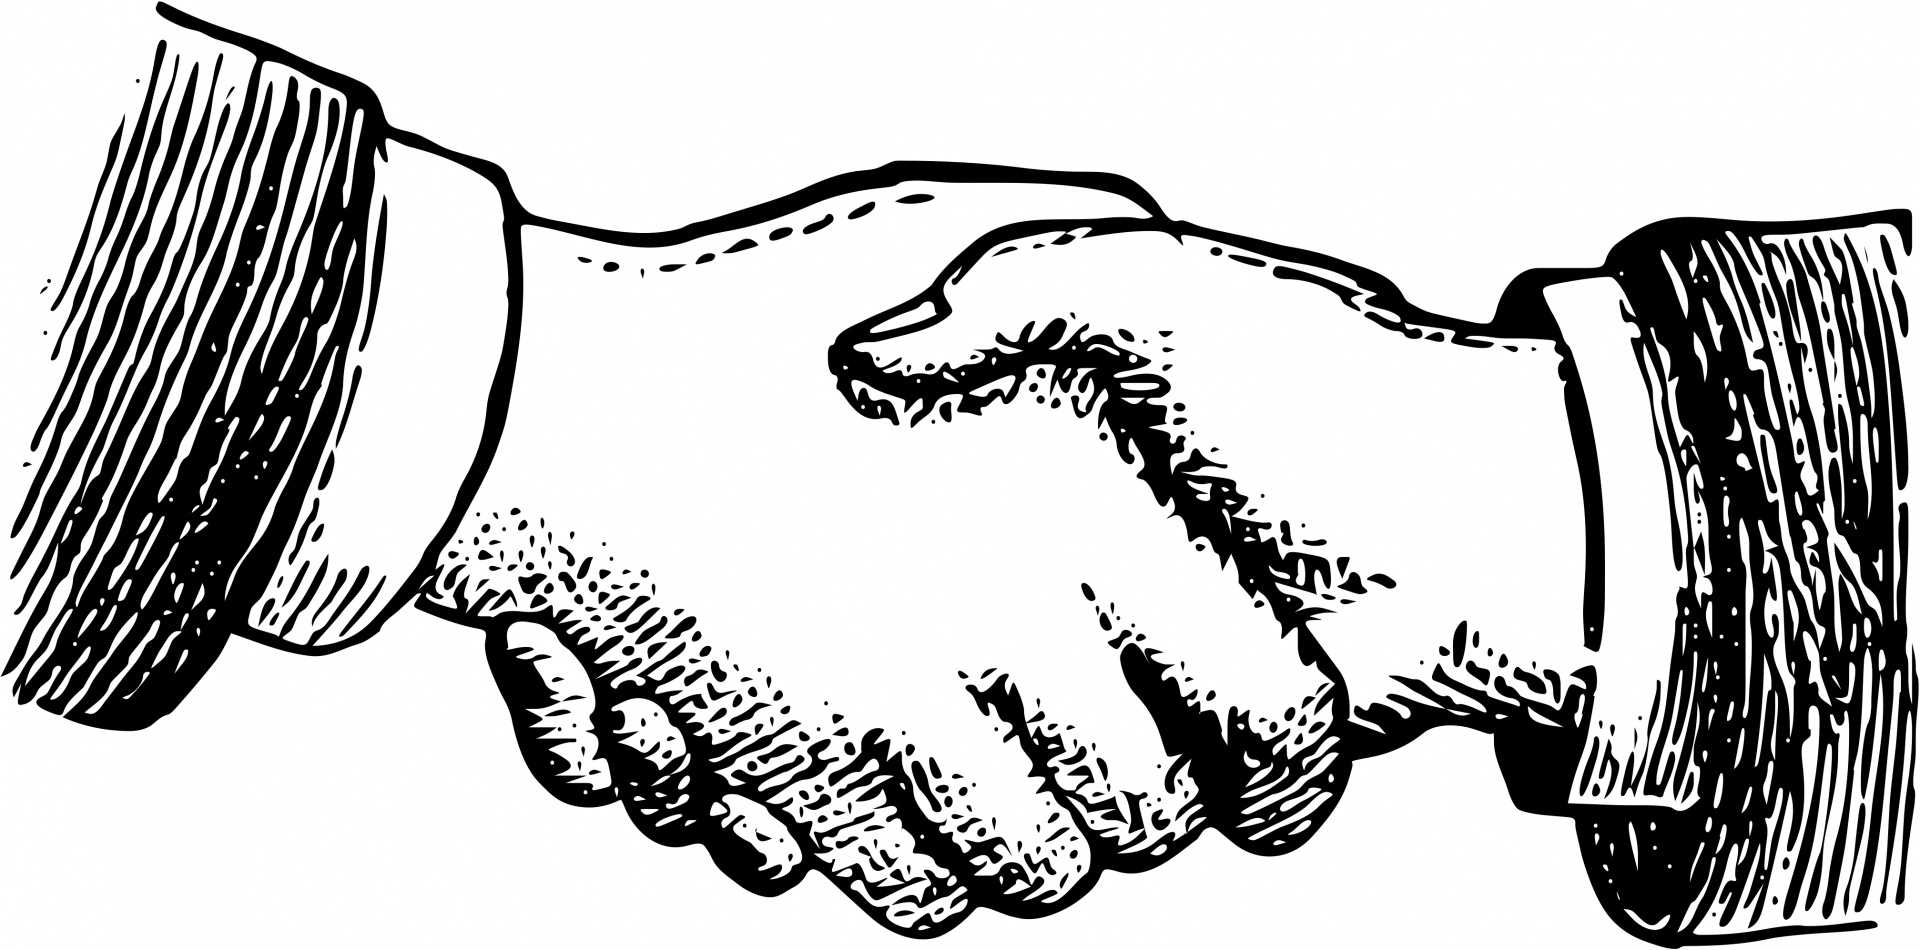 handshake clipart free download - photo #14